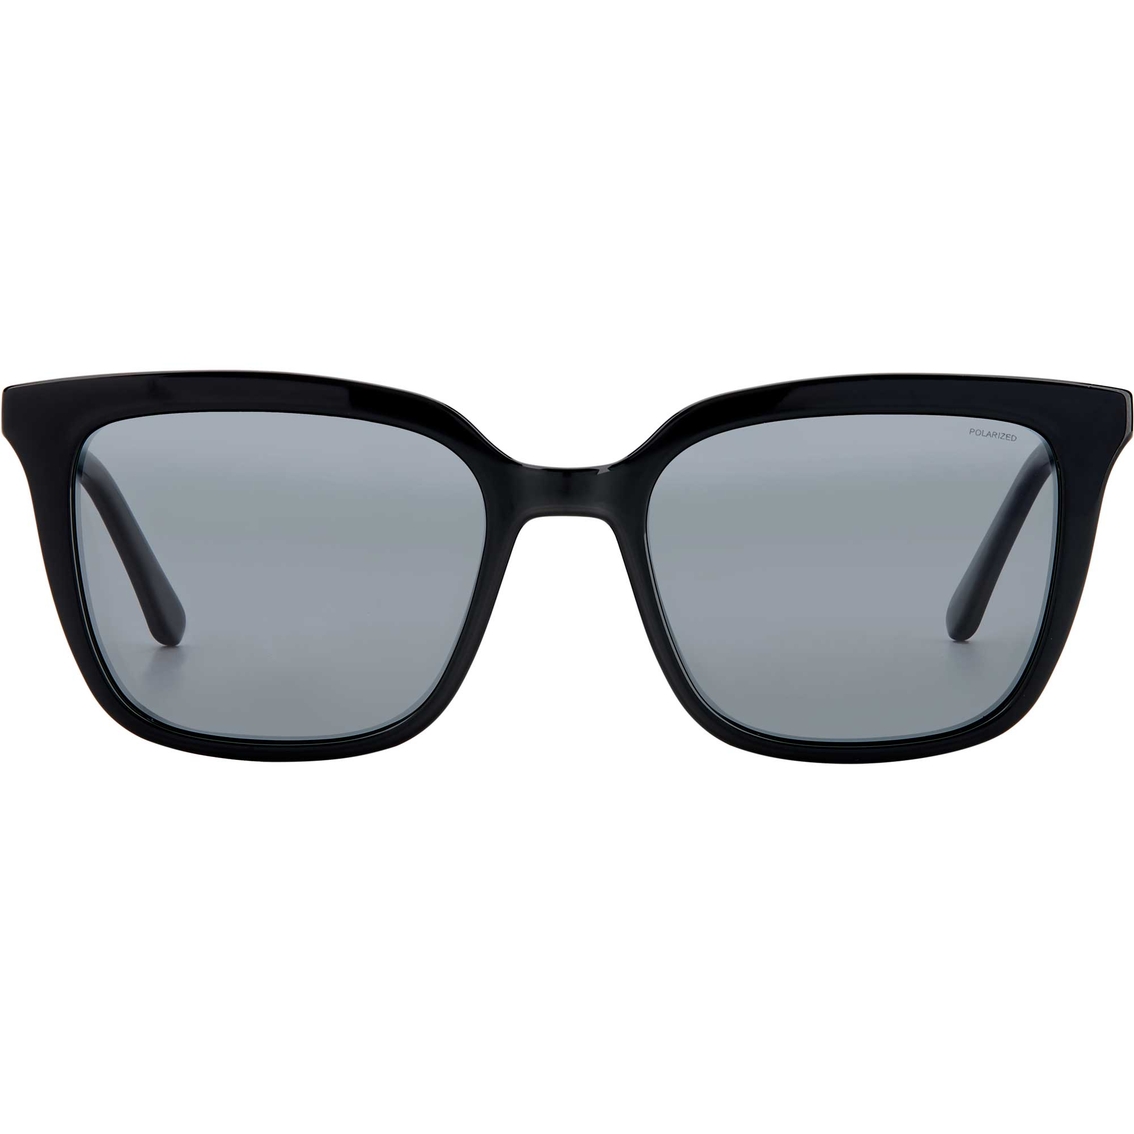 Fossil Rectangular Sunglasses Fos3112 | Sunglasses | Clothing ...